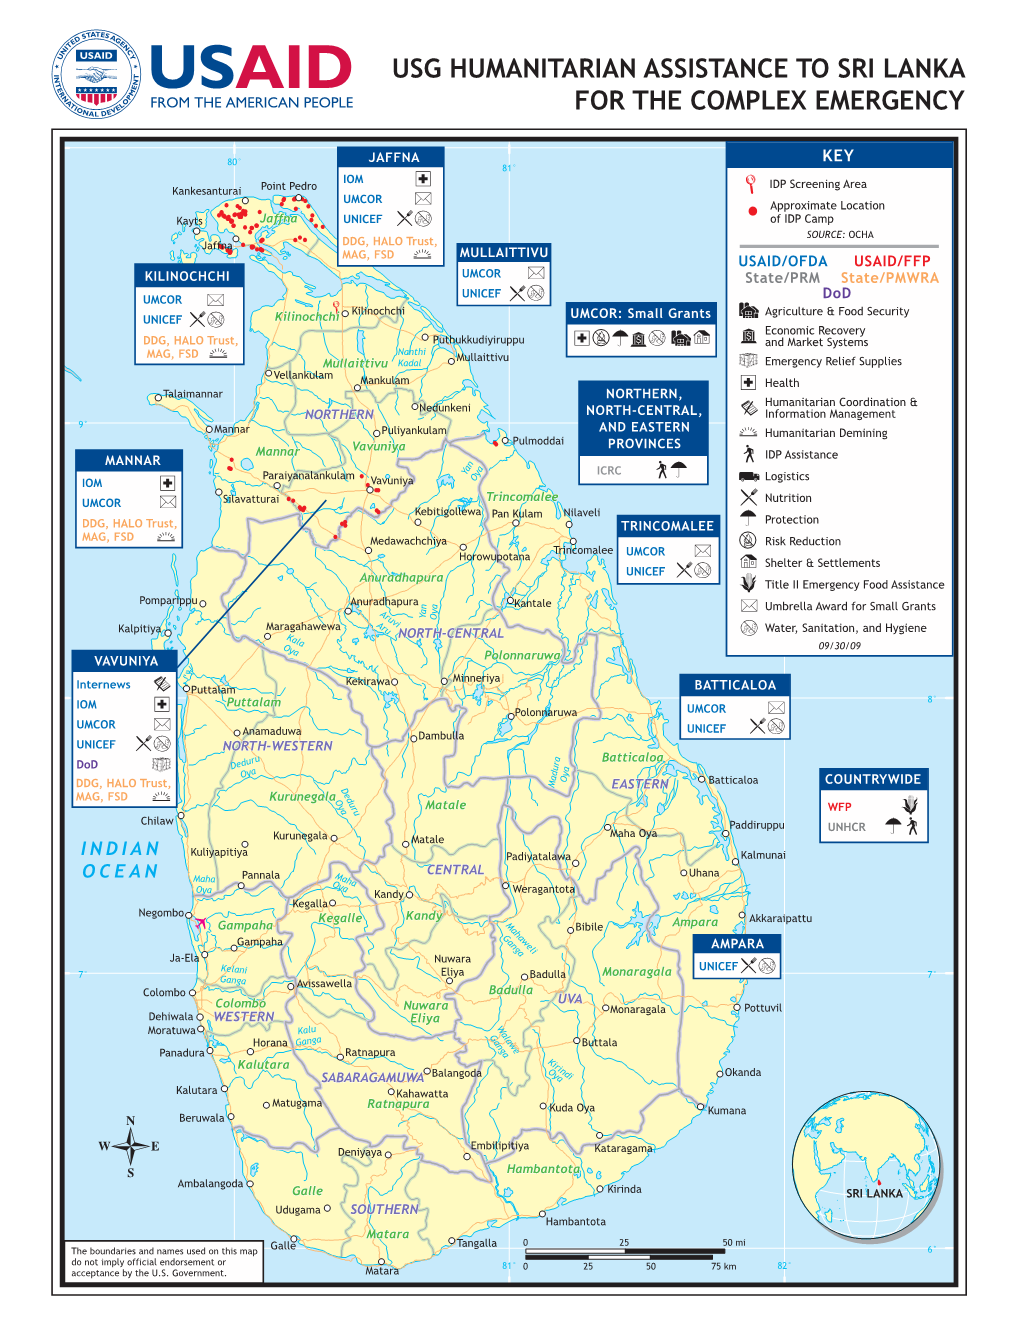 USAID/OFDA Sri Lanka Program Map 9/30/2009